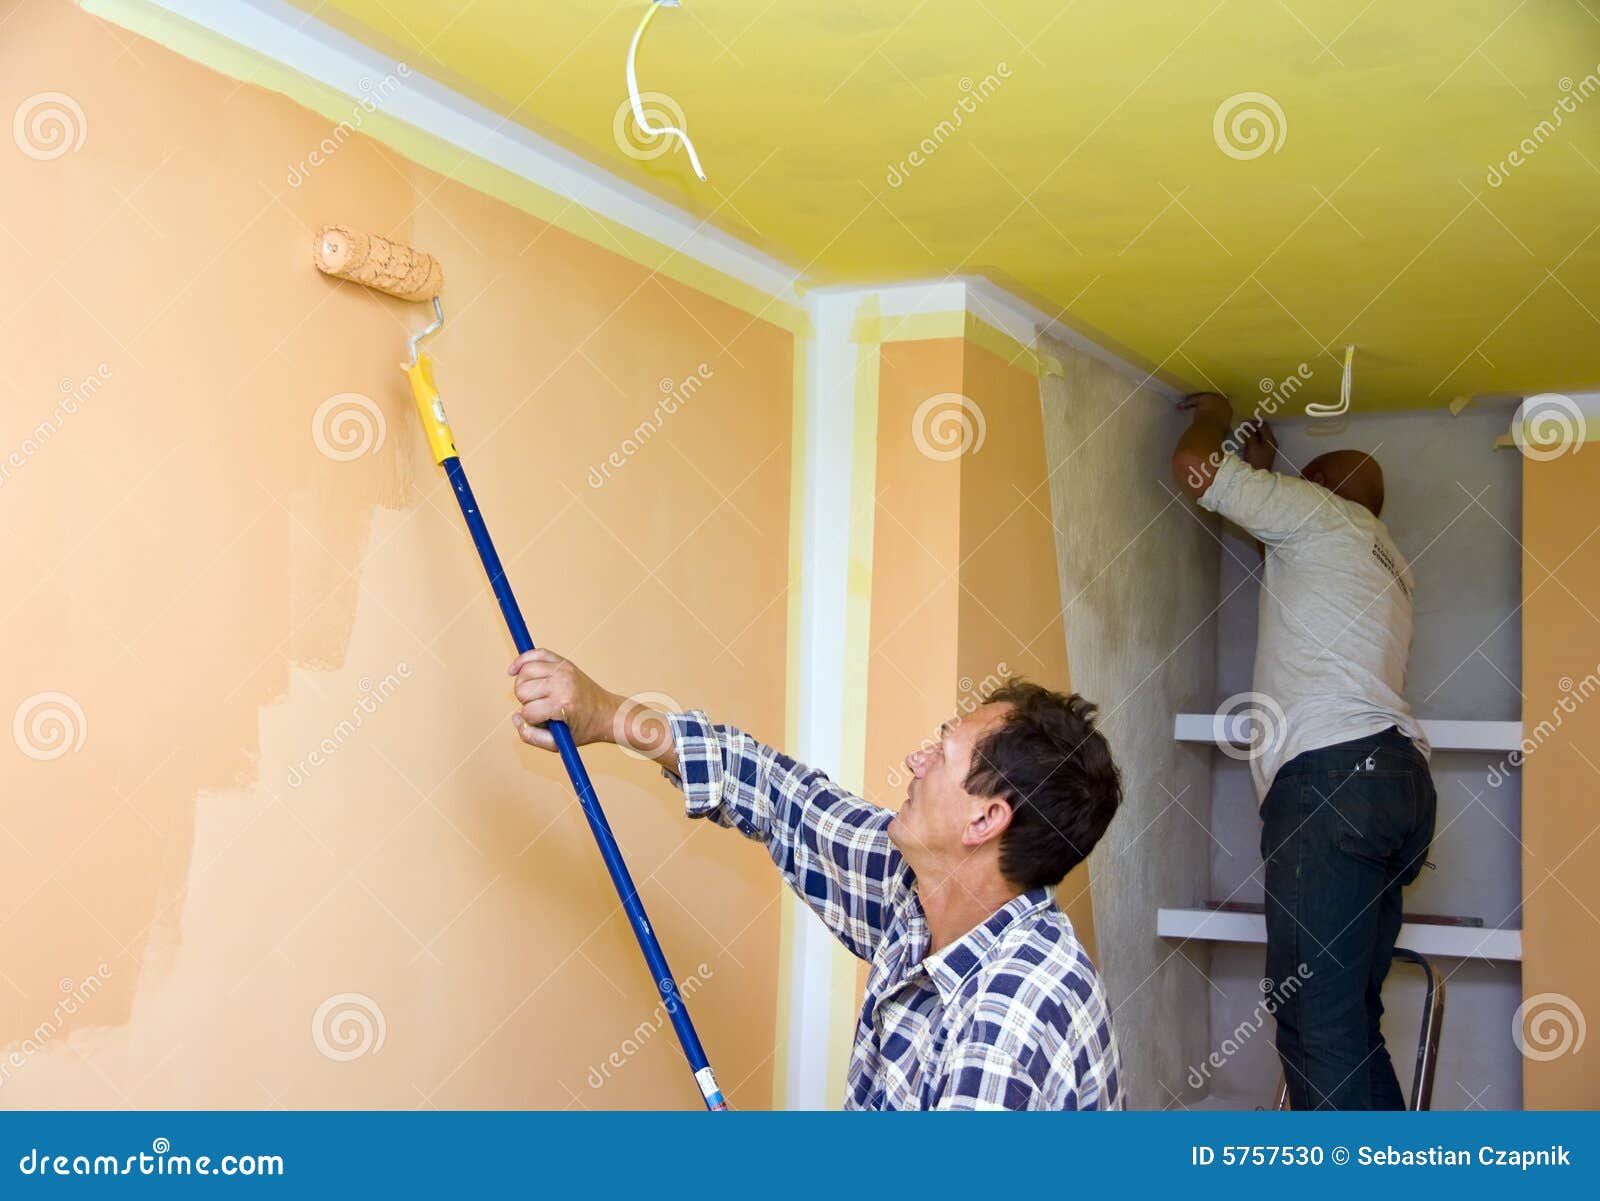 renovation team painting room